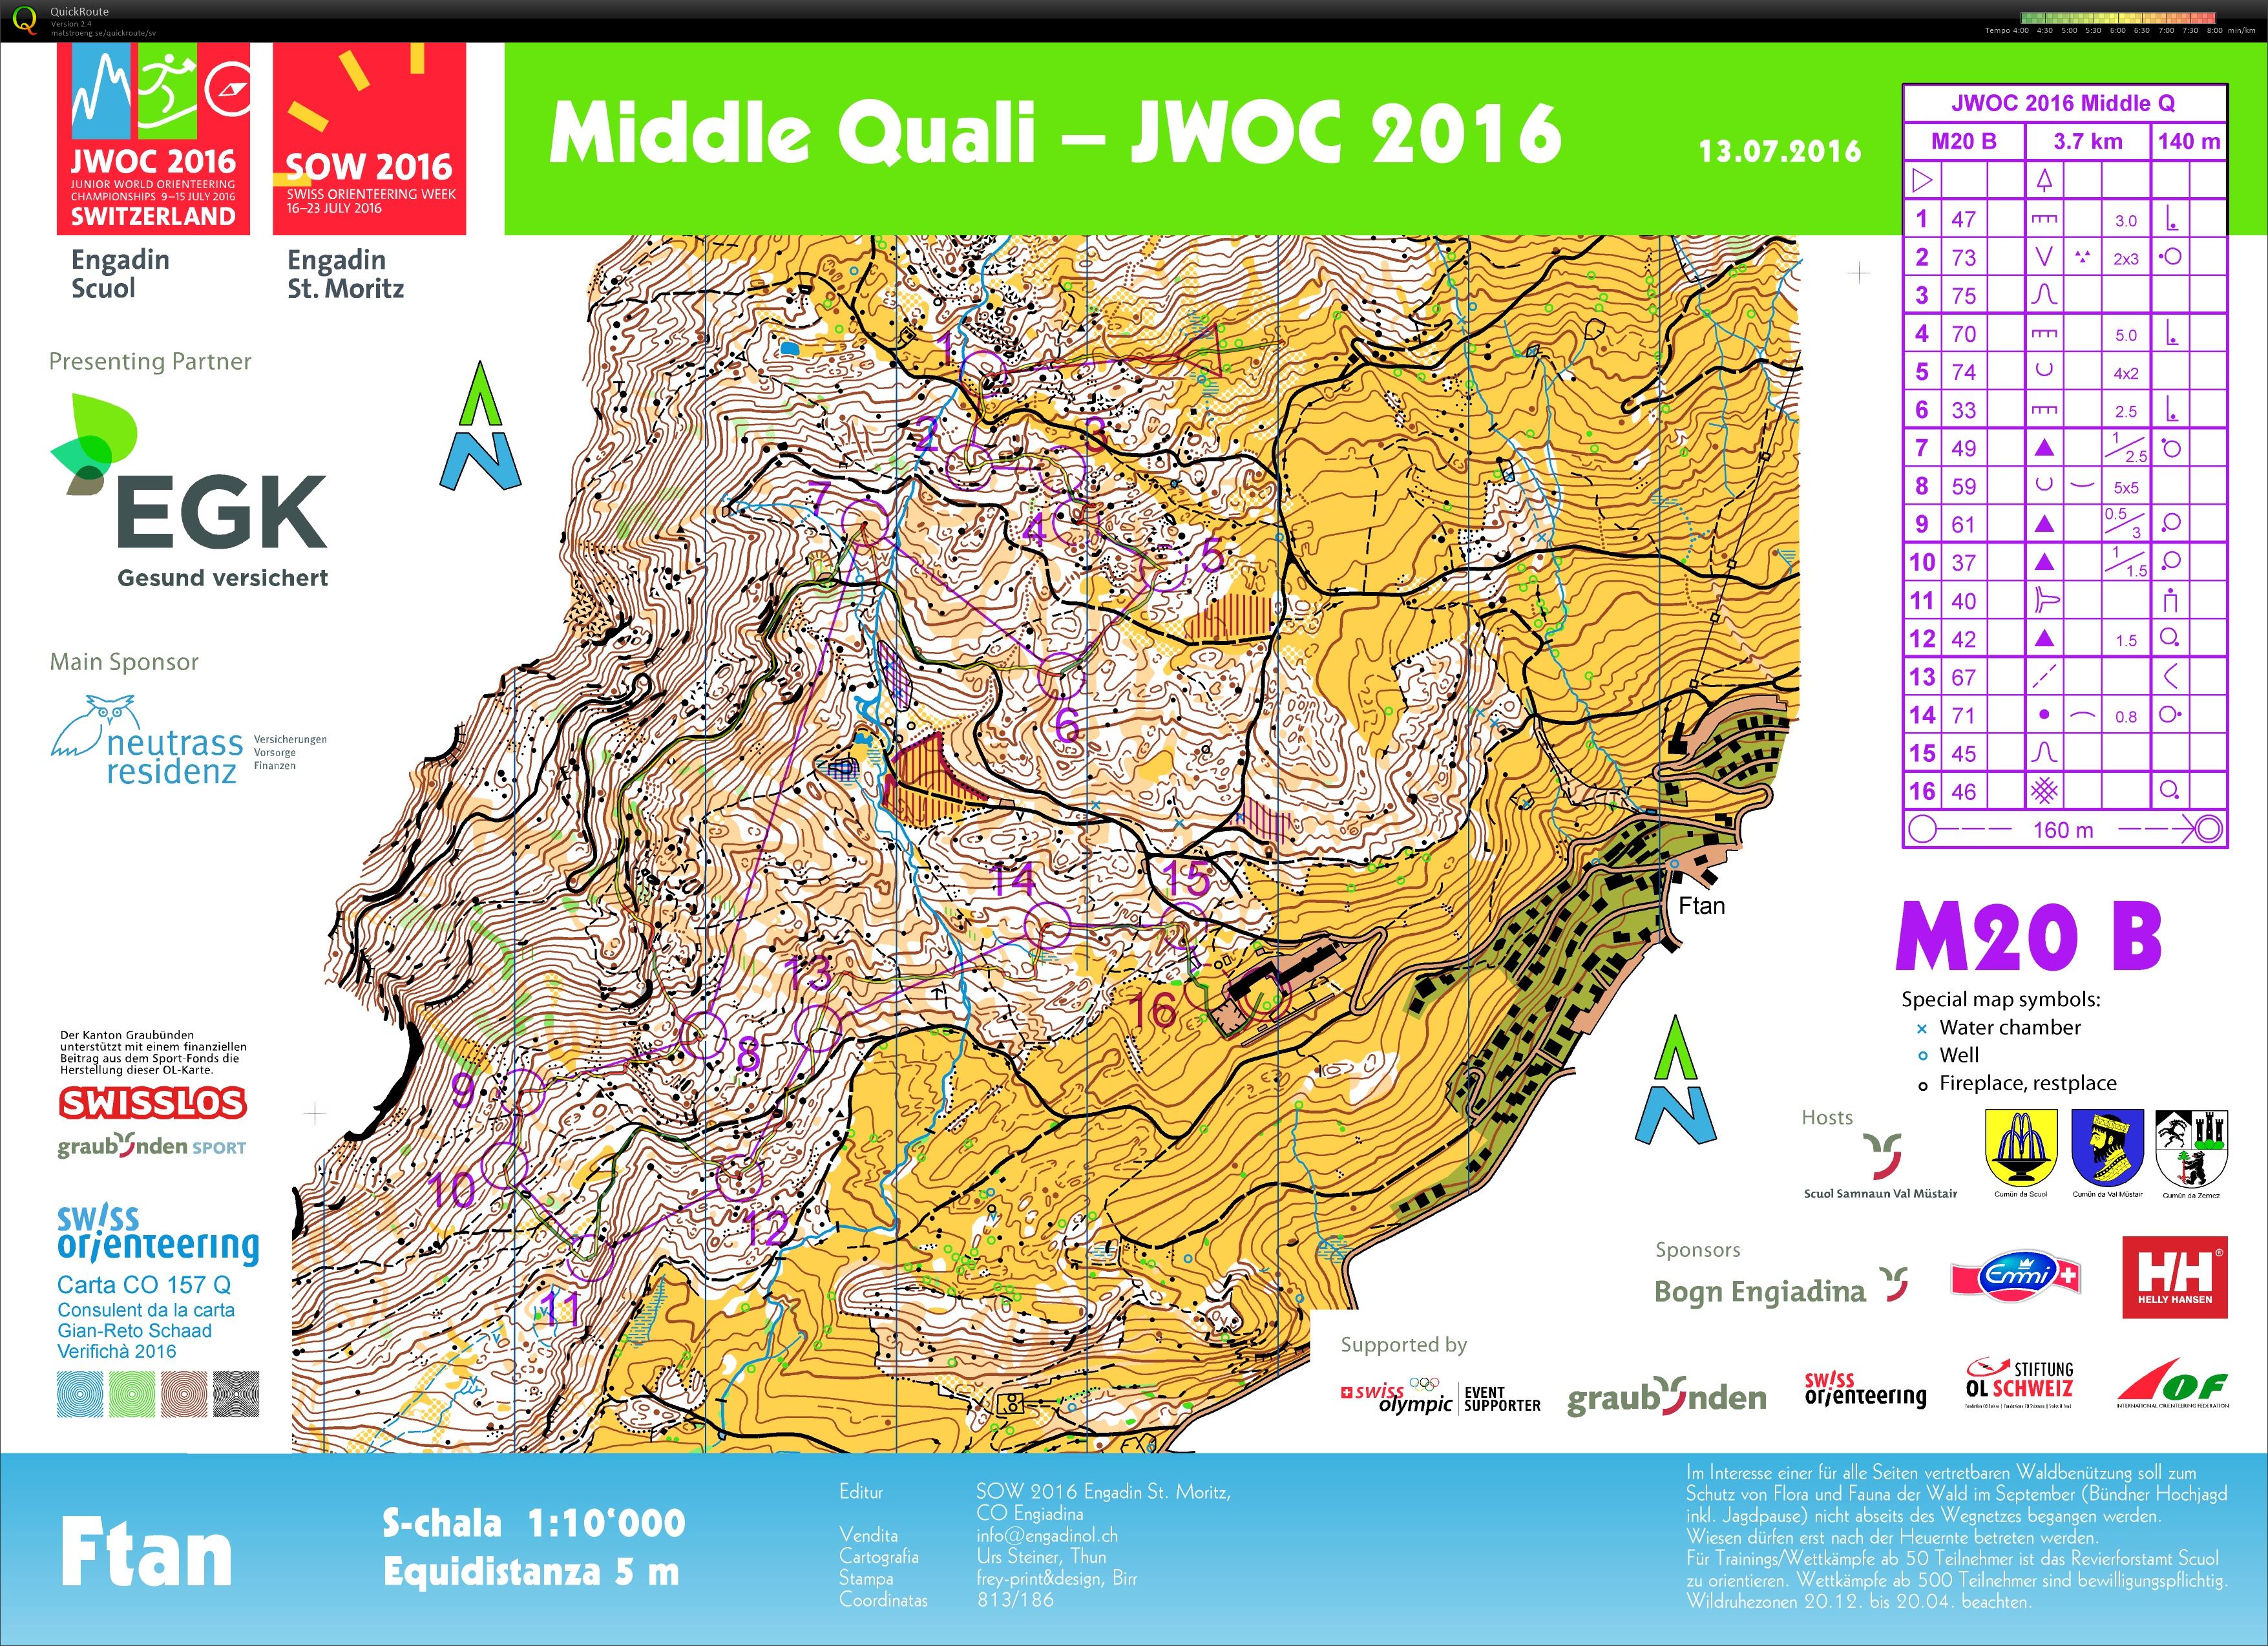 JWOC Middle Qualification heat B (13-07-2016)